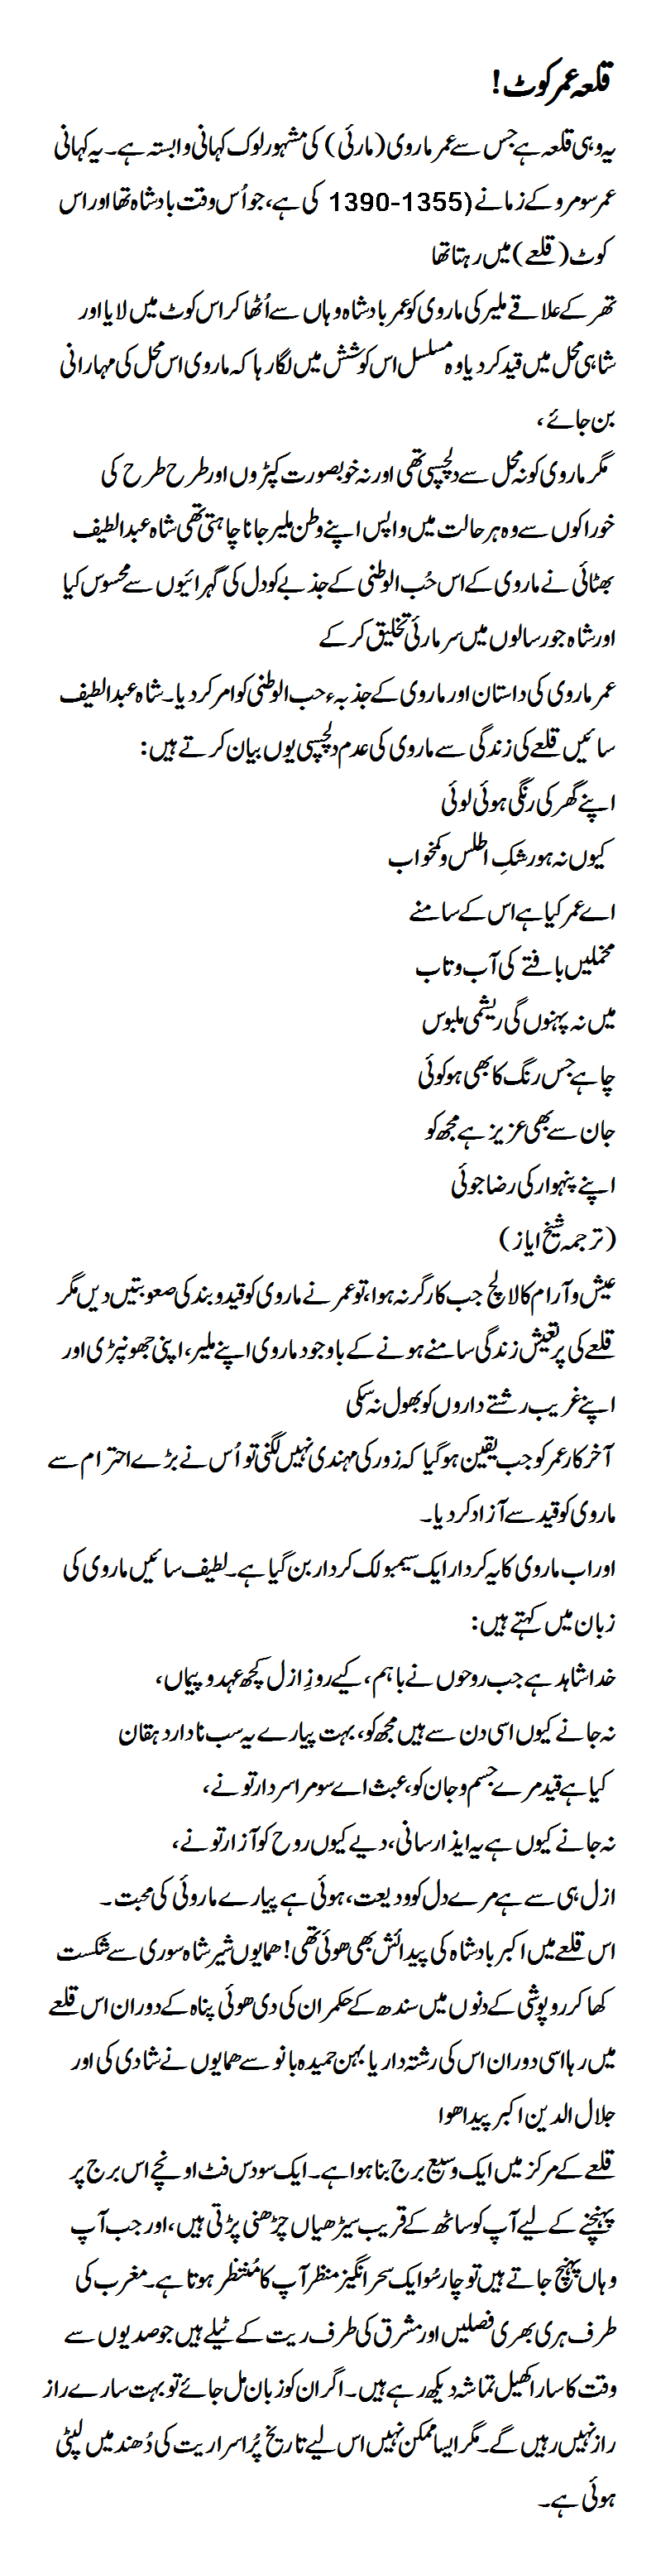 The story of Qila Umar Kot